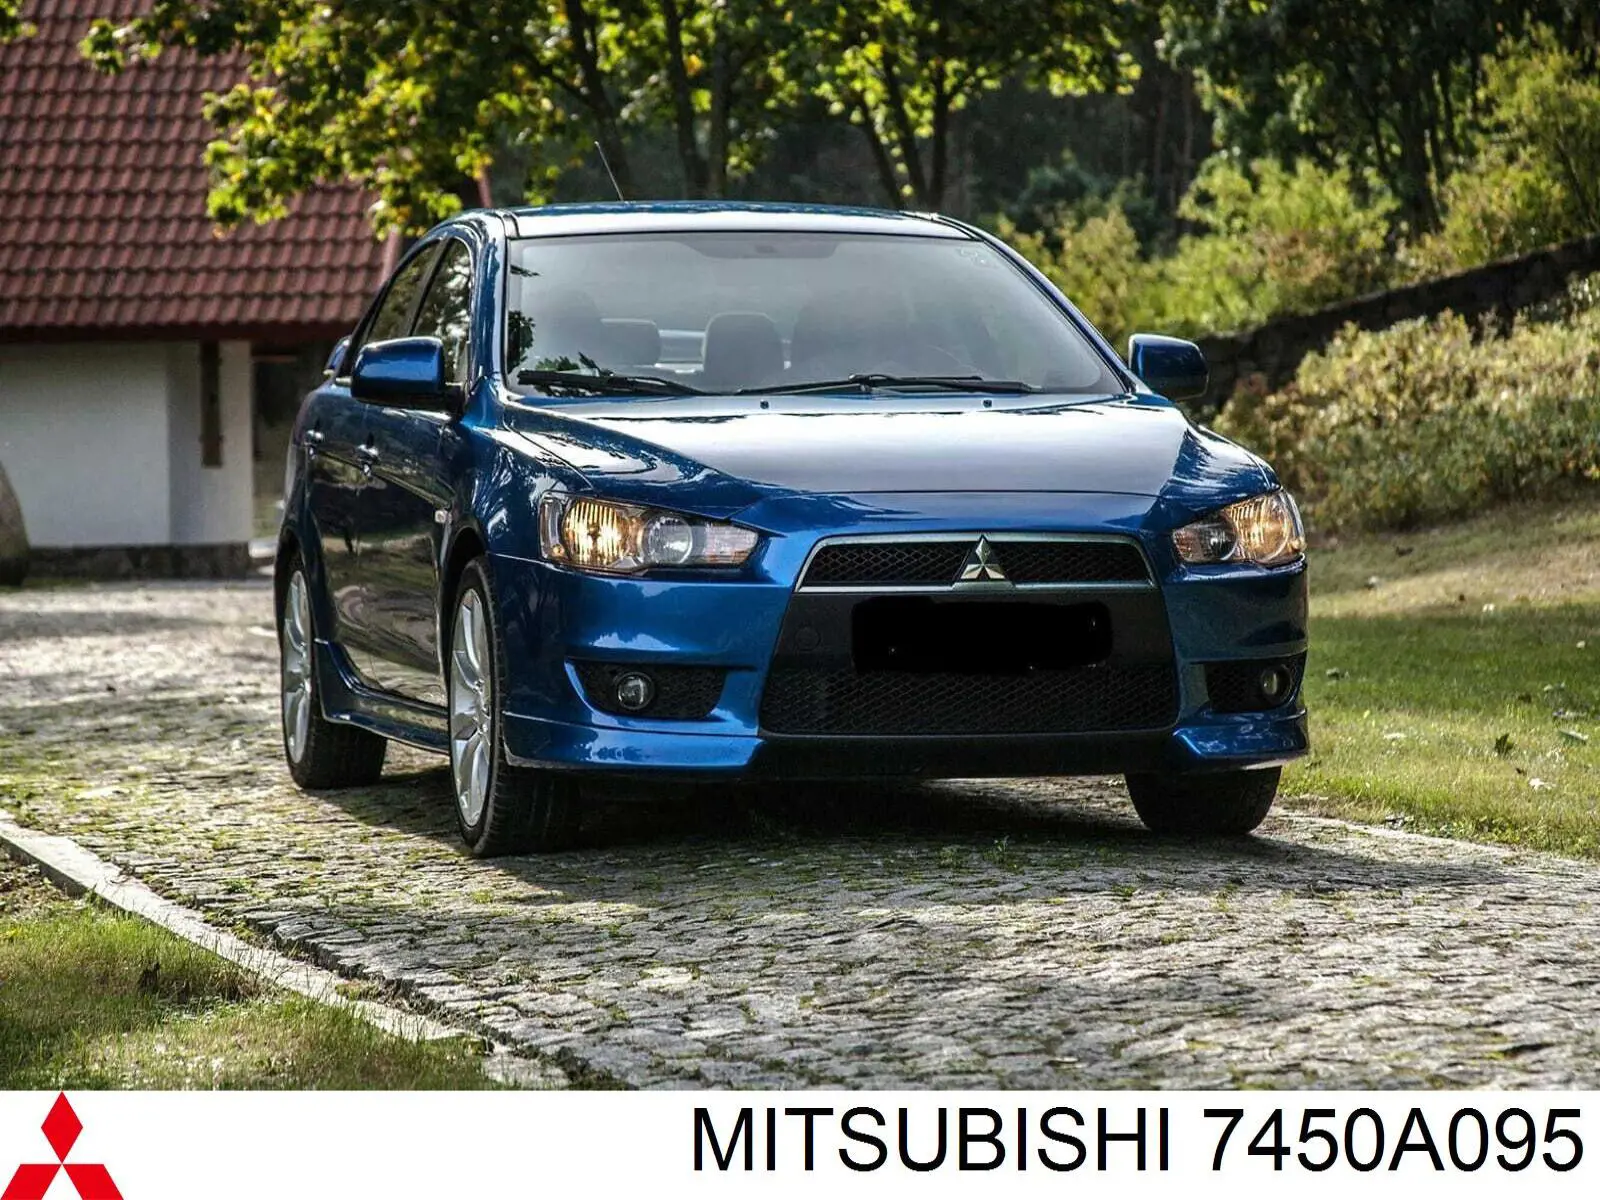 7450A095 Mitsubishi grelha do radiador